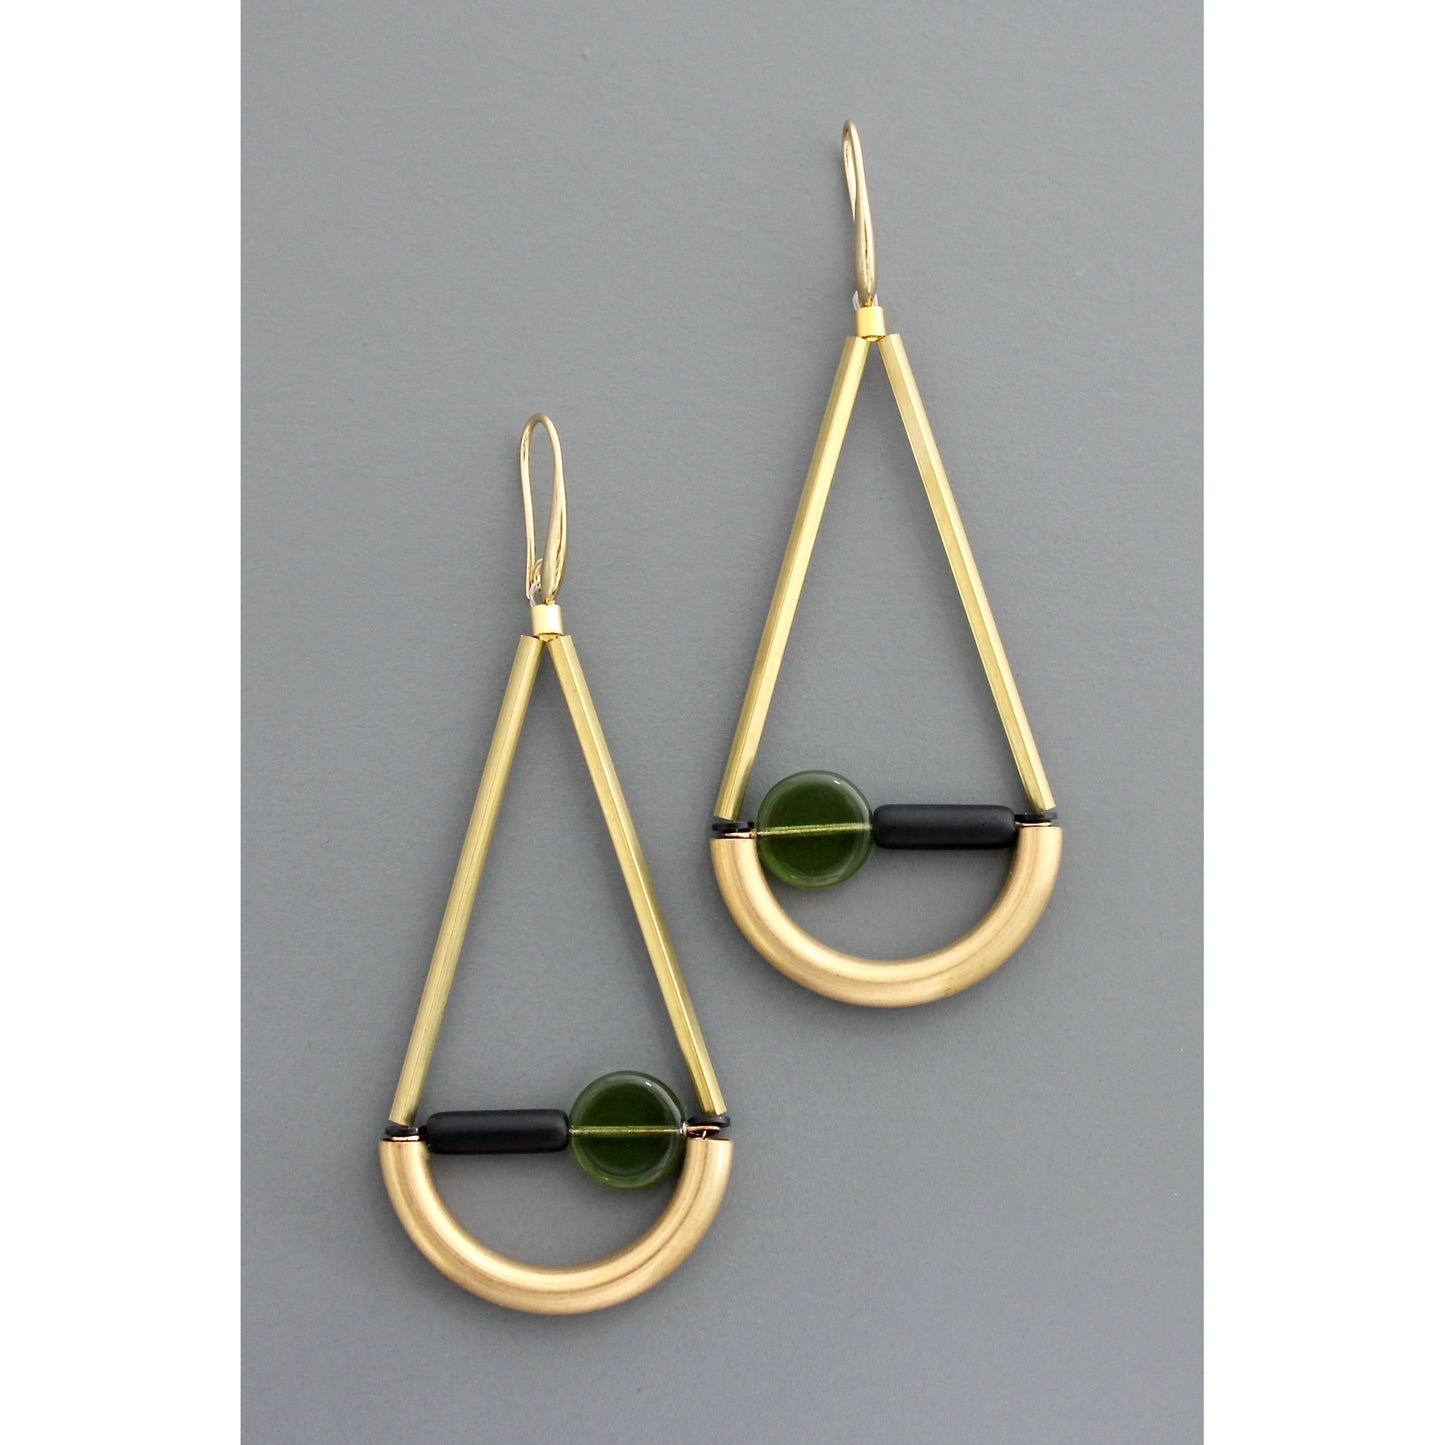 David Aubrey Jewelry - Geometric glass earrings